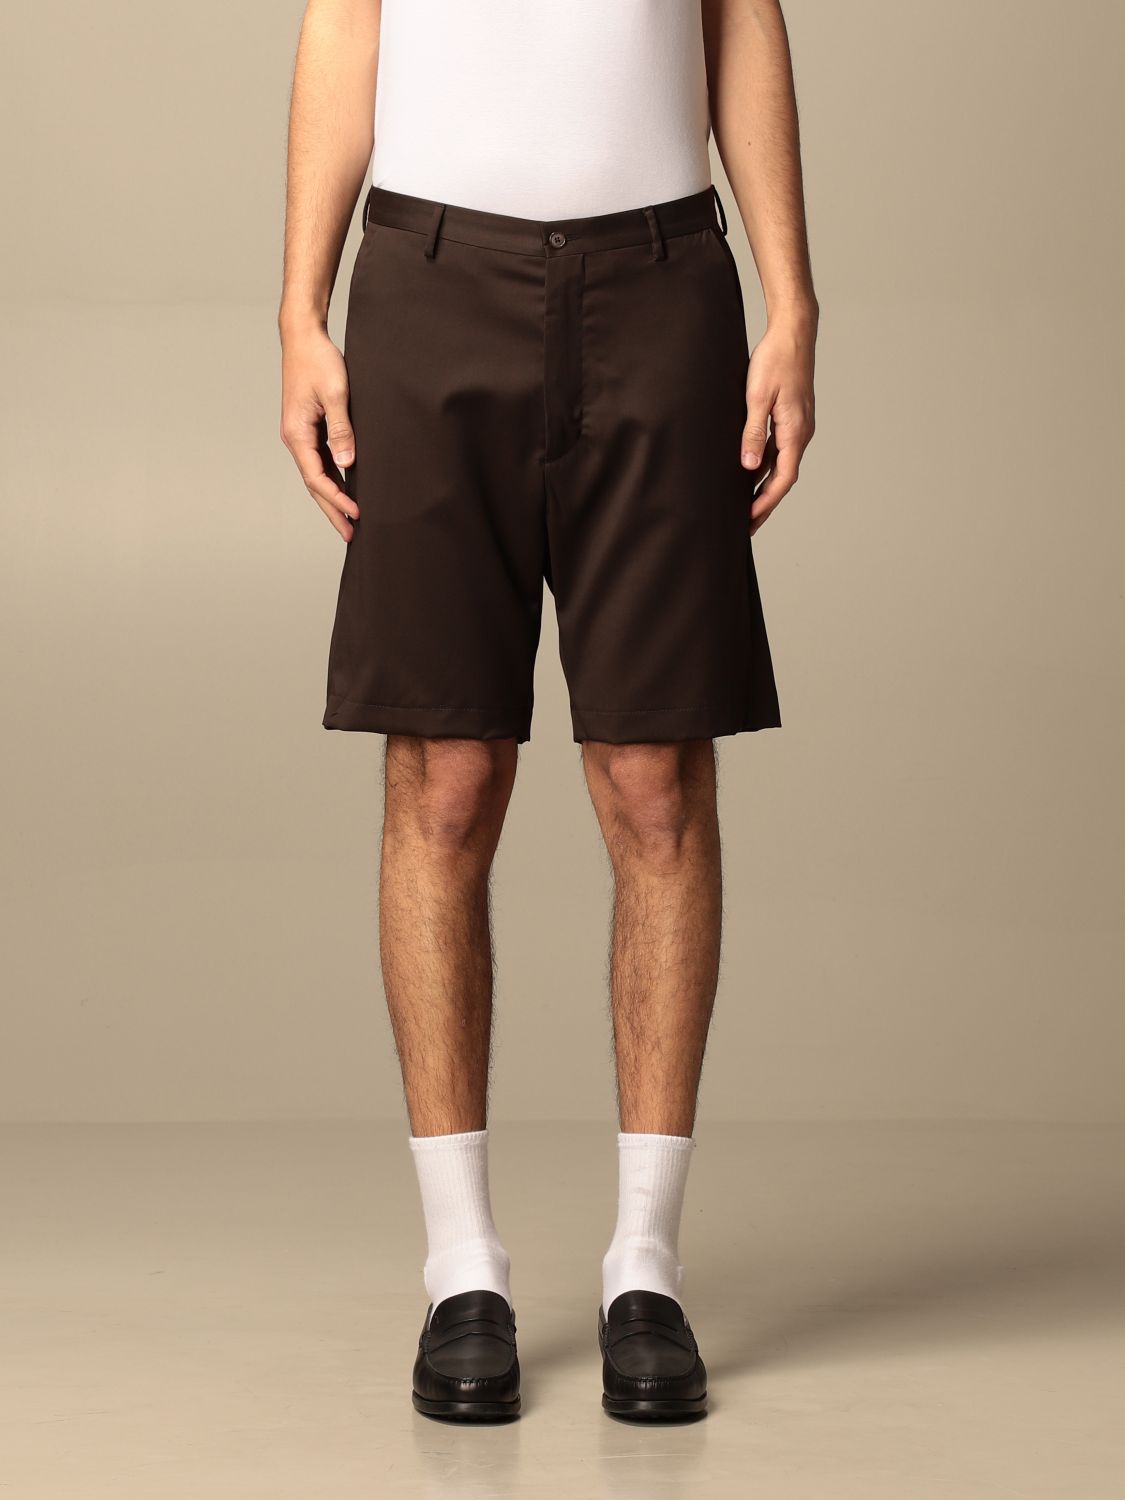 Pantalones cortos Paura: Pantalones cortos hombre Paura Di Danilo Paura marrón oscuro 1